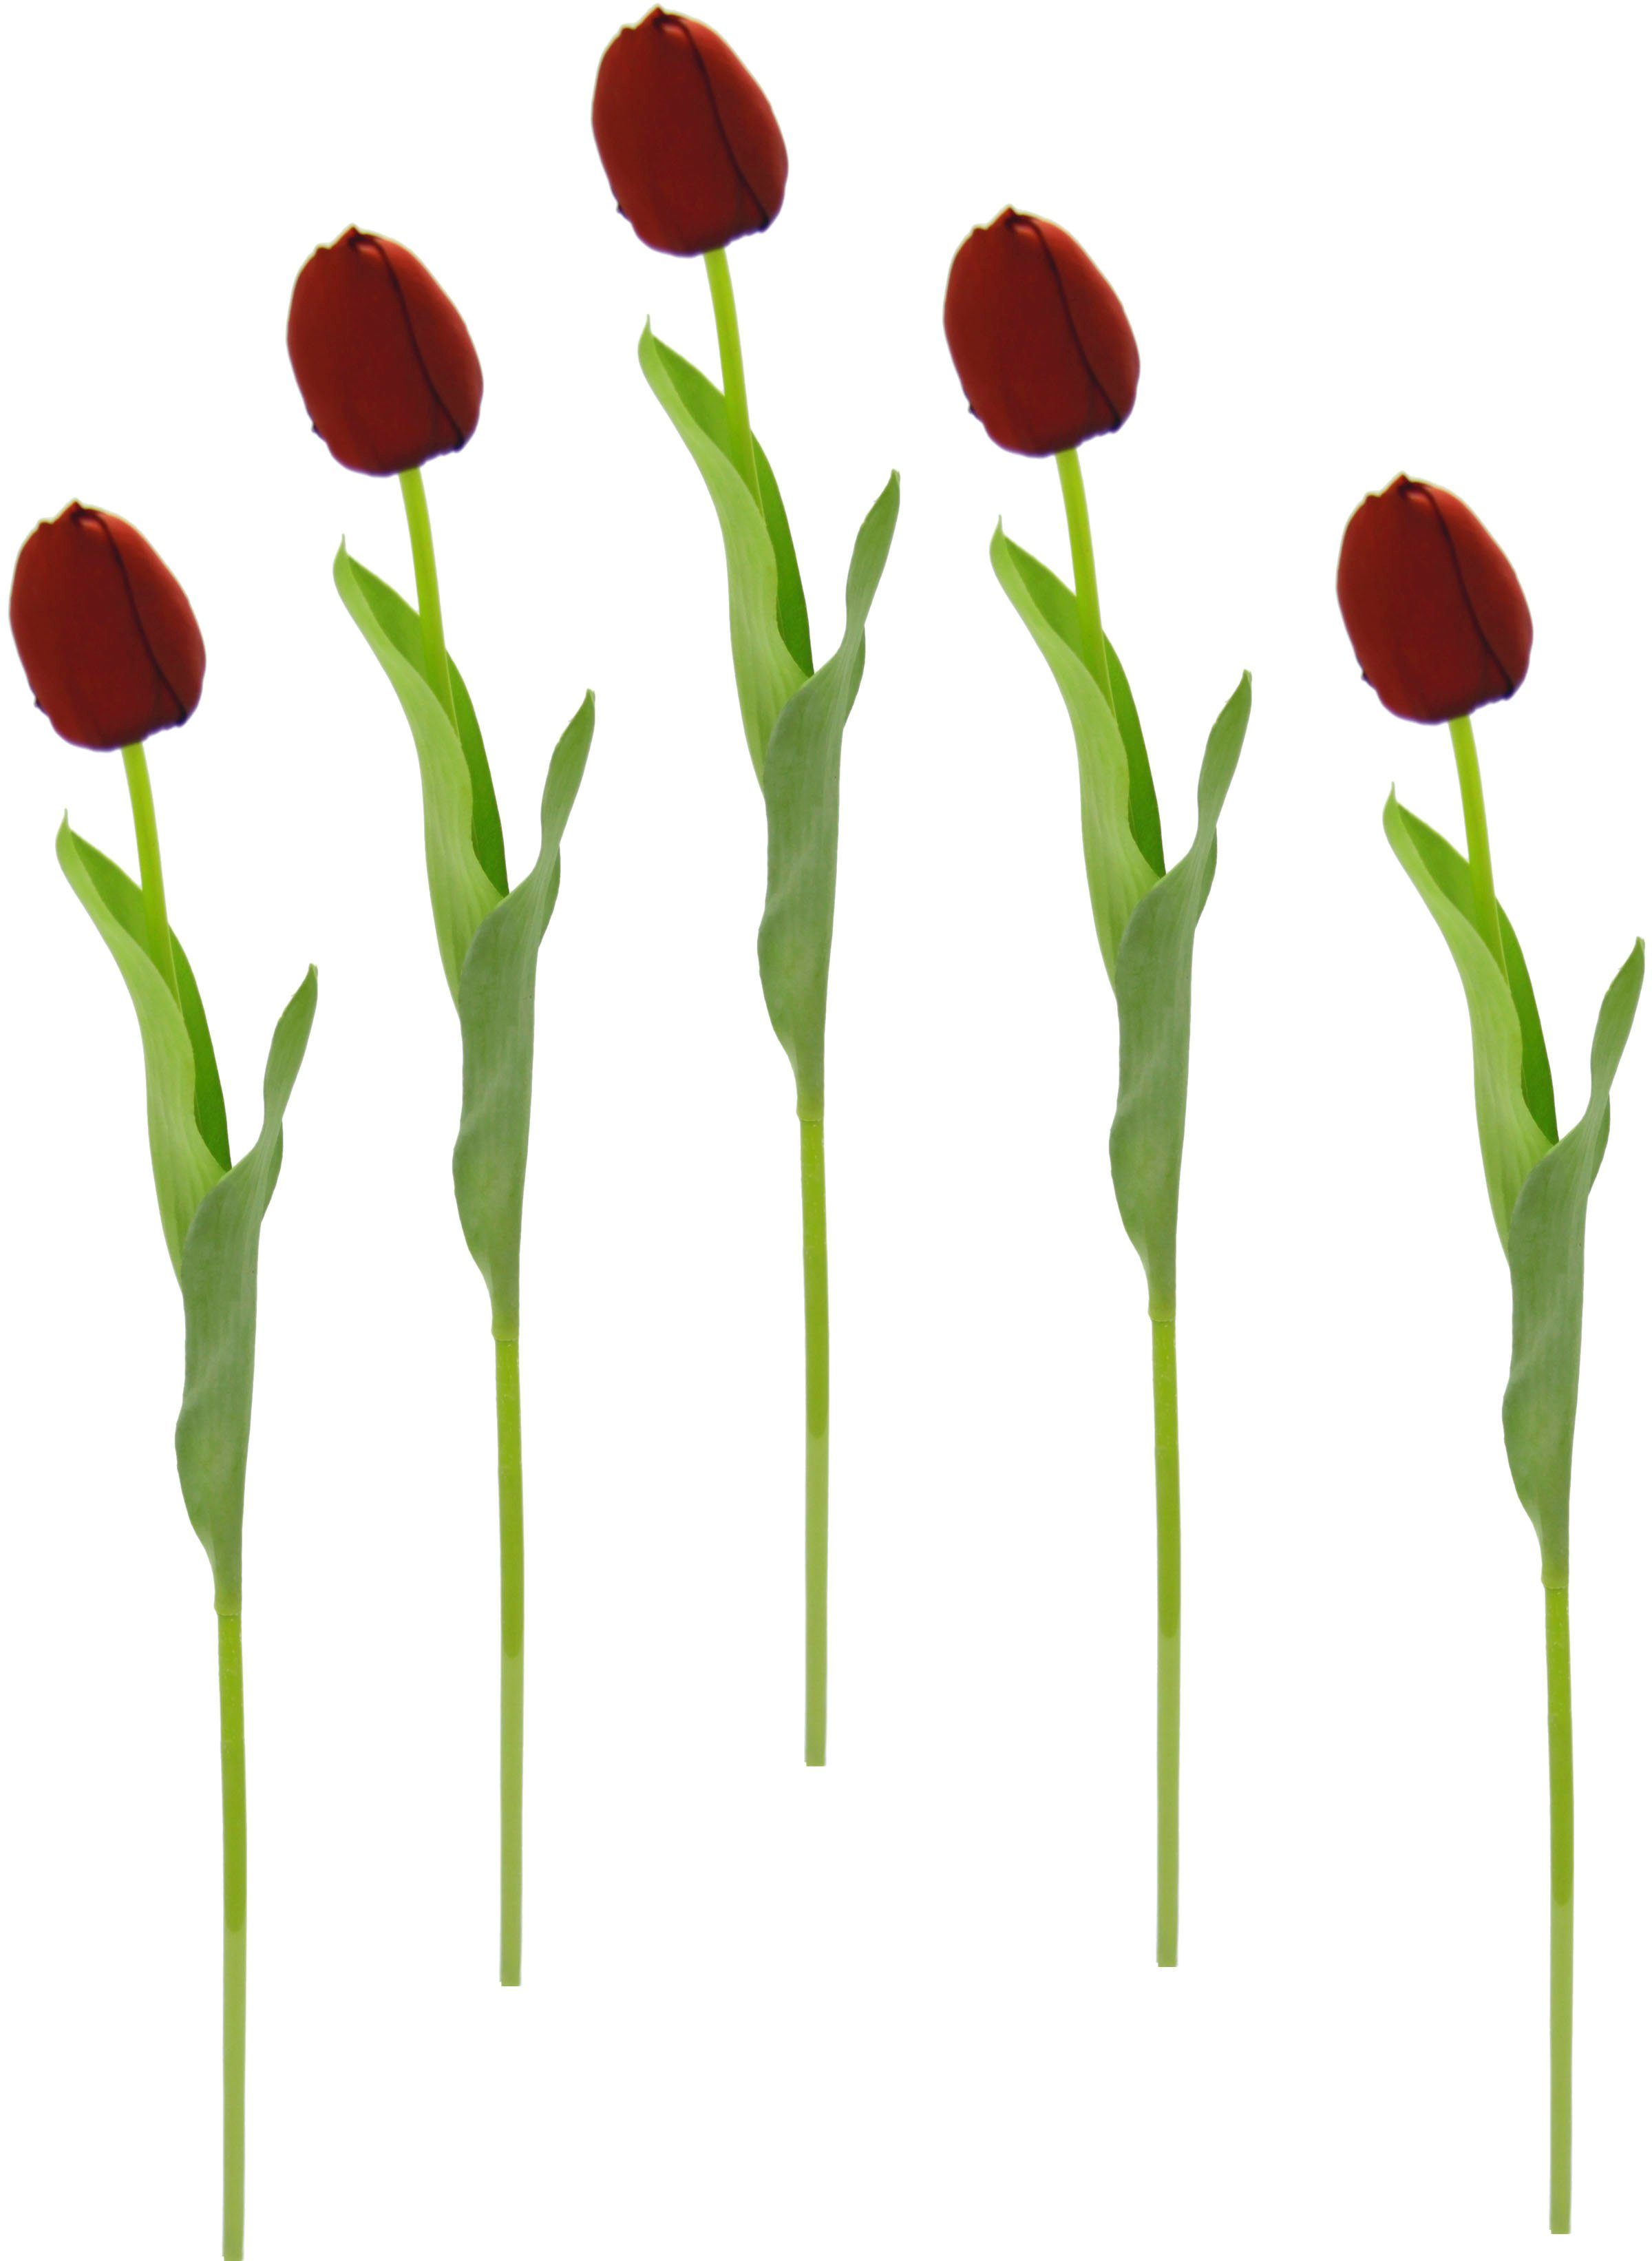 Kunstblume Real Touch Tulpen, dunkelrosa Stielblume Höhe cm, Set I.GE.A., Tulpenknospen, 5er künstliche 67 Kunstblumen